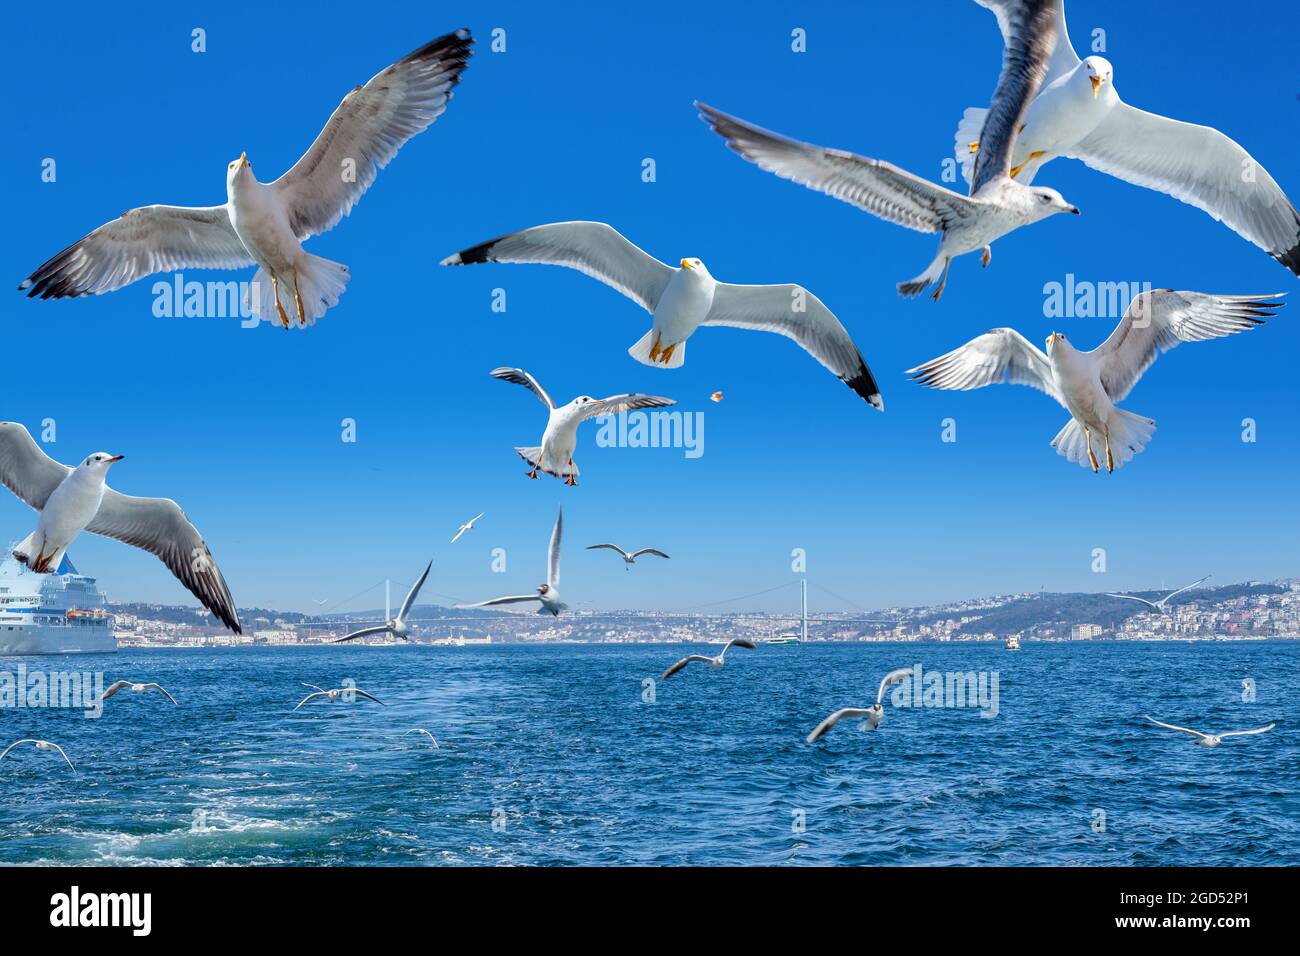 Seagulls following the ferry, Bosphorus bridge and cityscape, Istanbul - Turkey Stock Photo